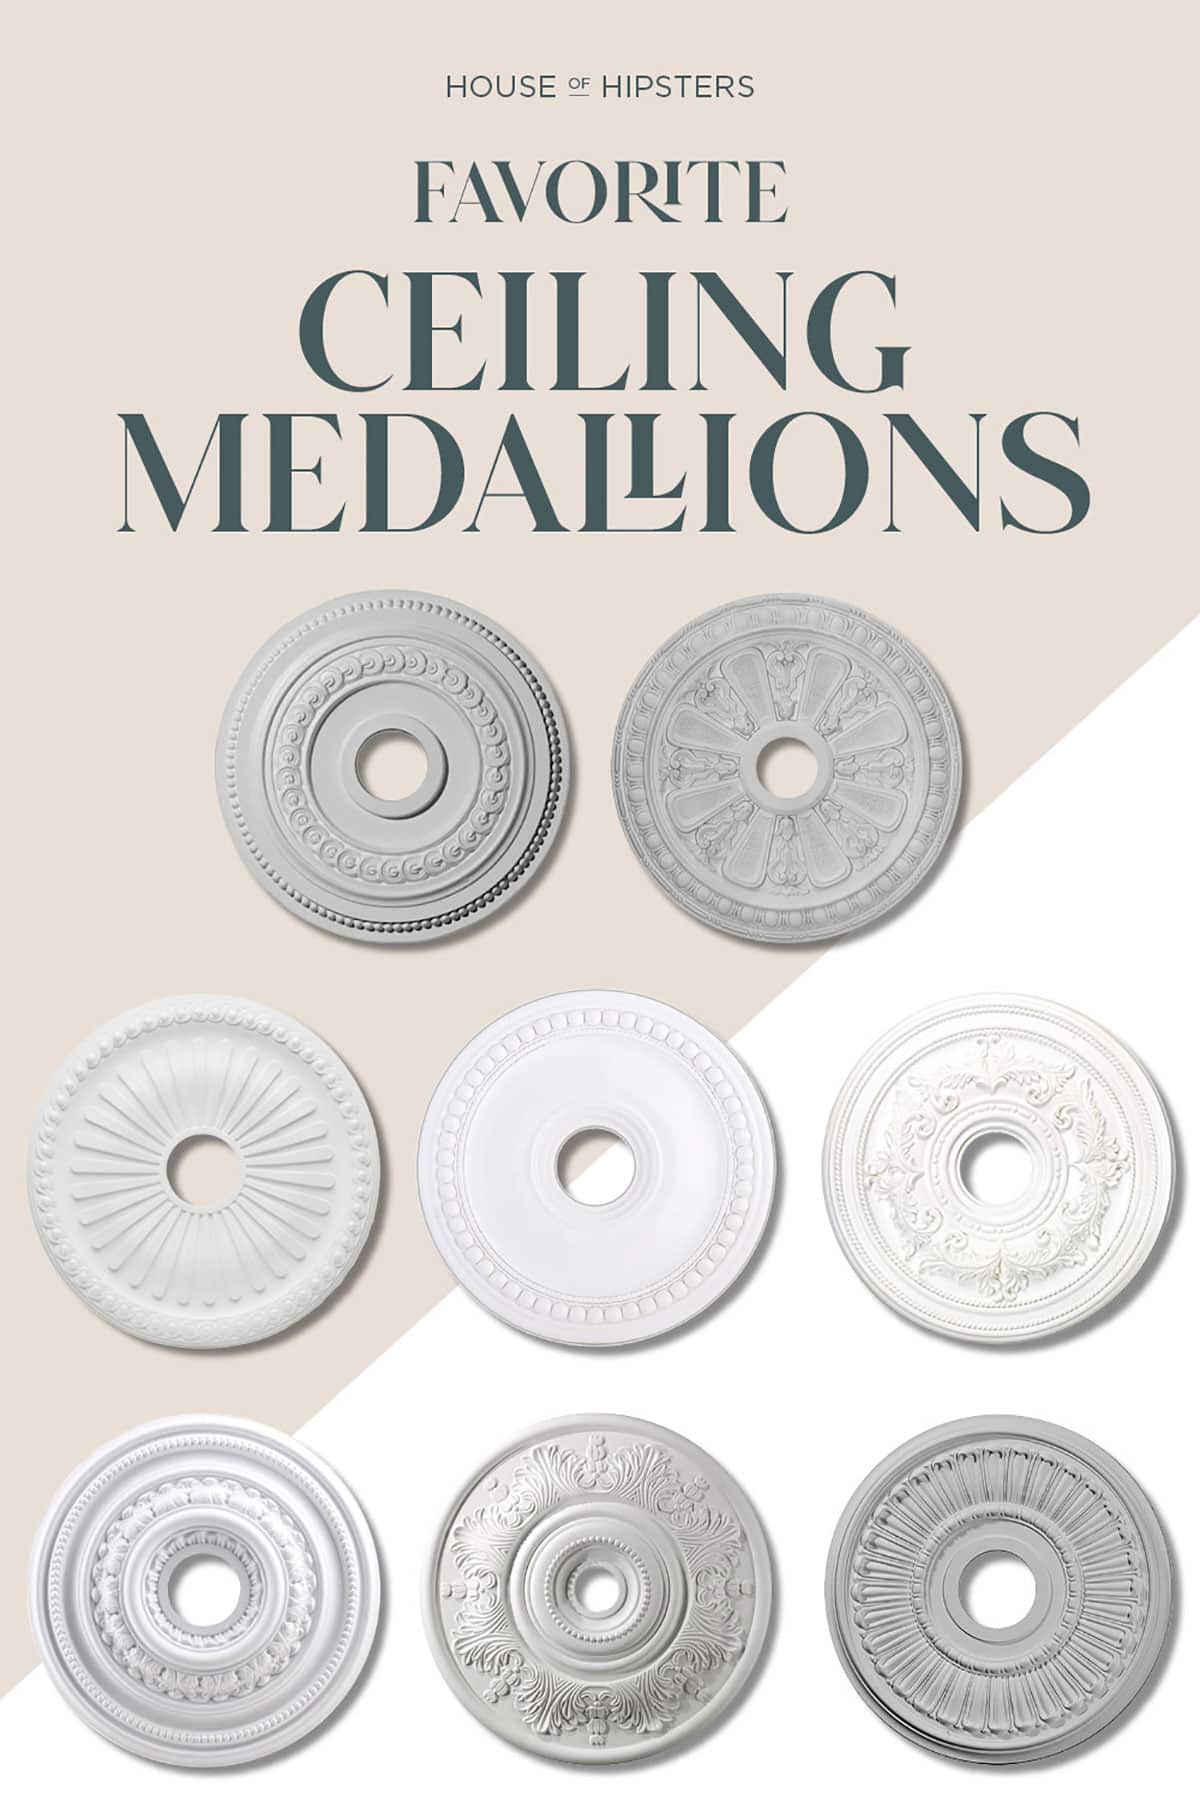 Best Ceiling Medallions for a ceiling light